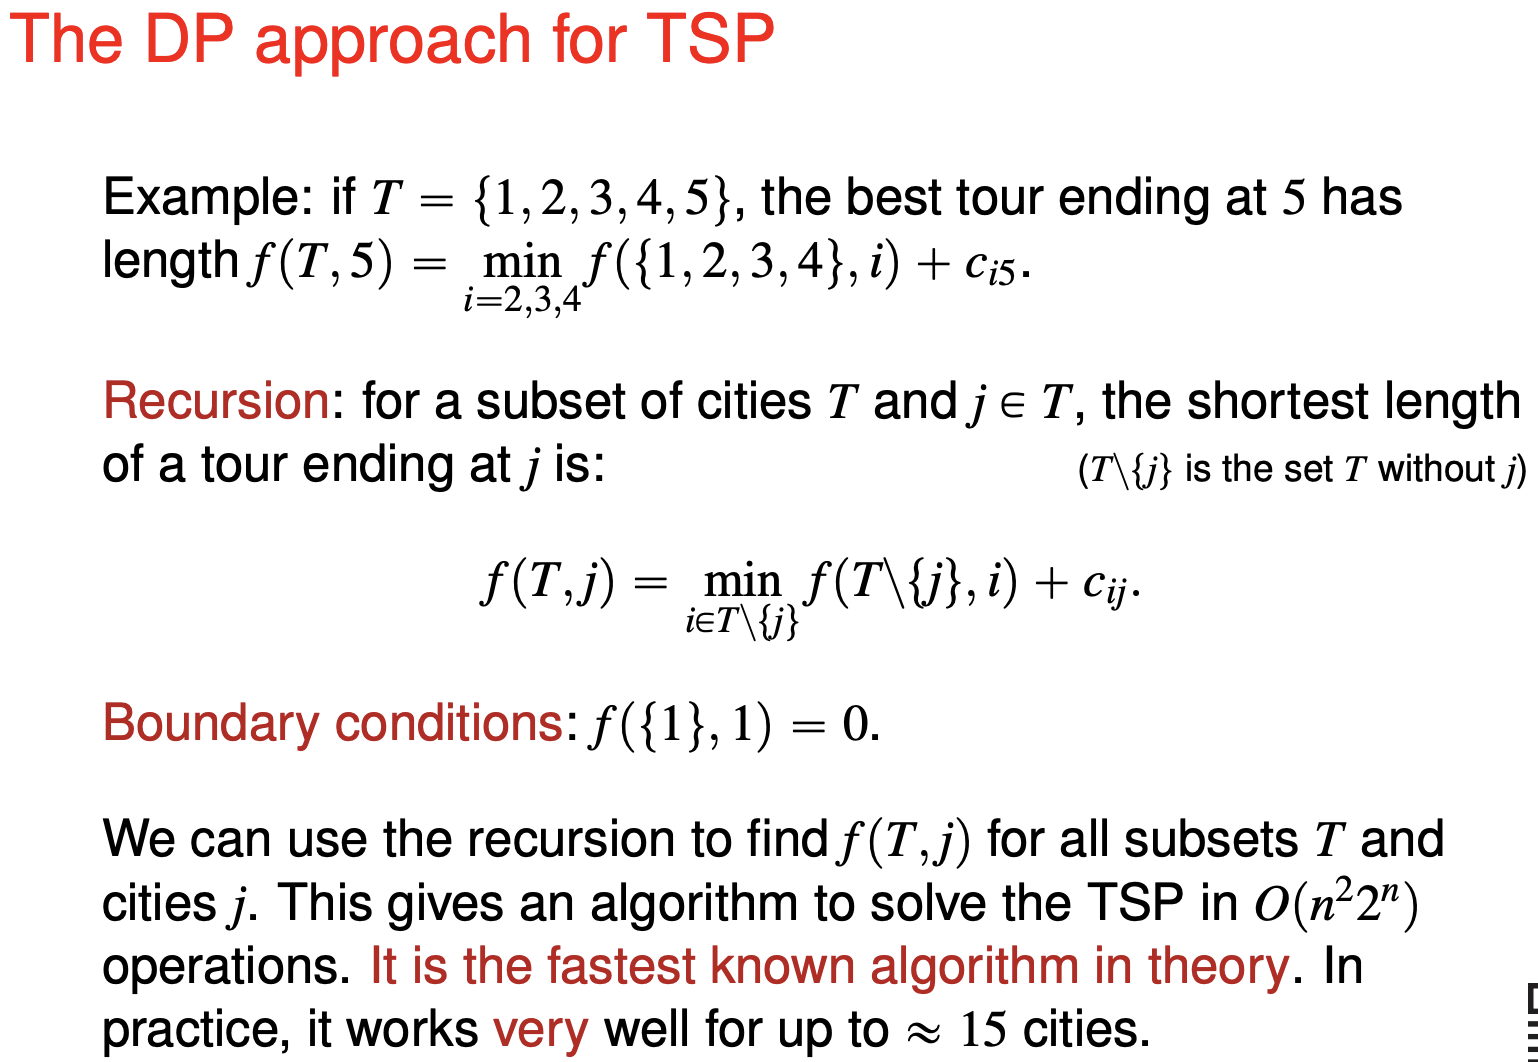 tsp-dynamic-programming.png